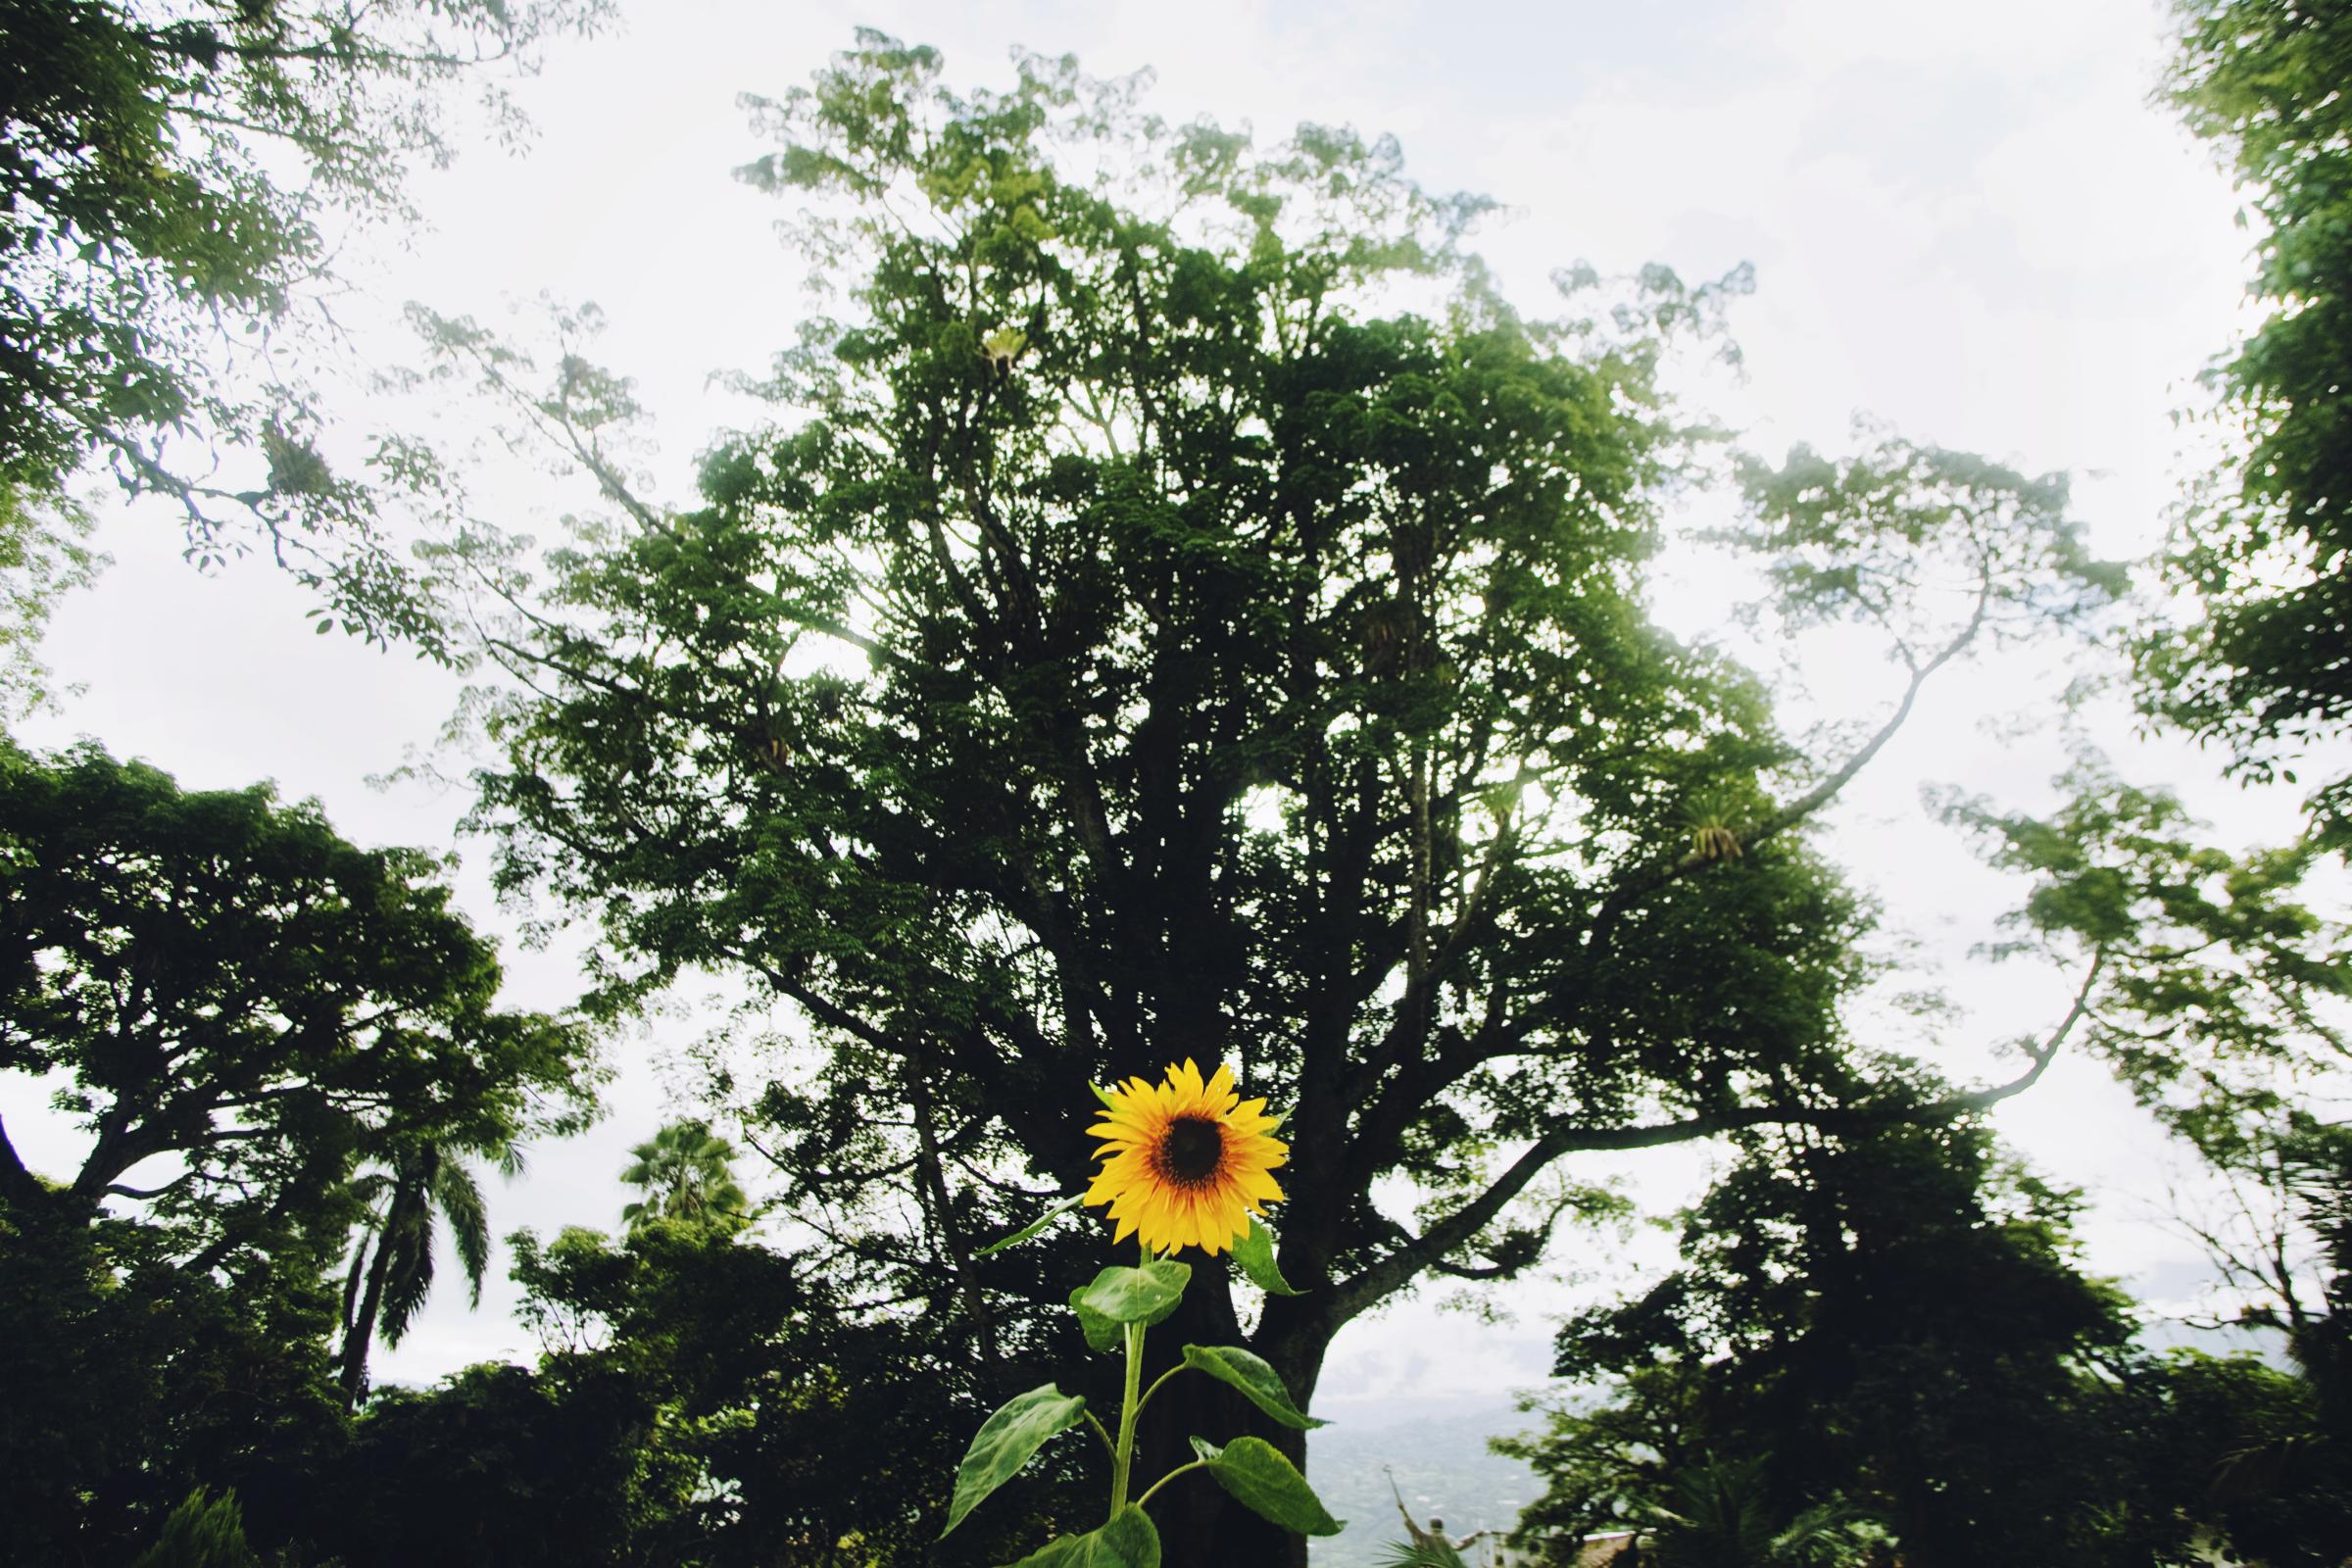 Boyacá - A sunflower in the town of Garagoa, Boyacá,...